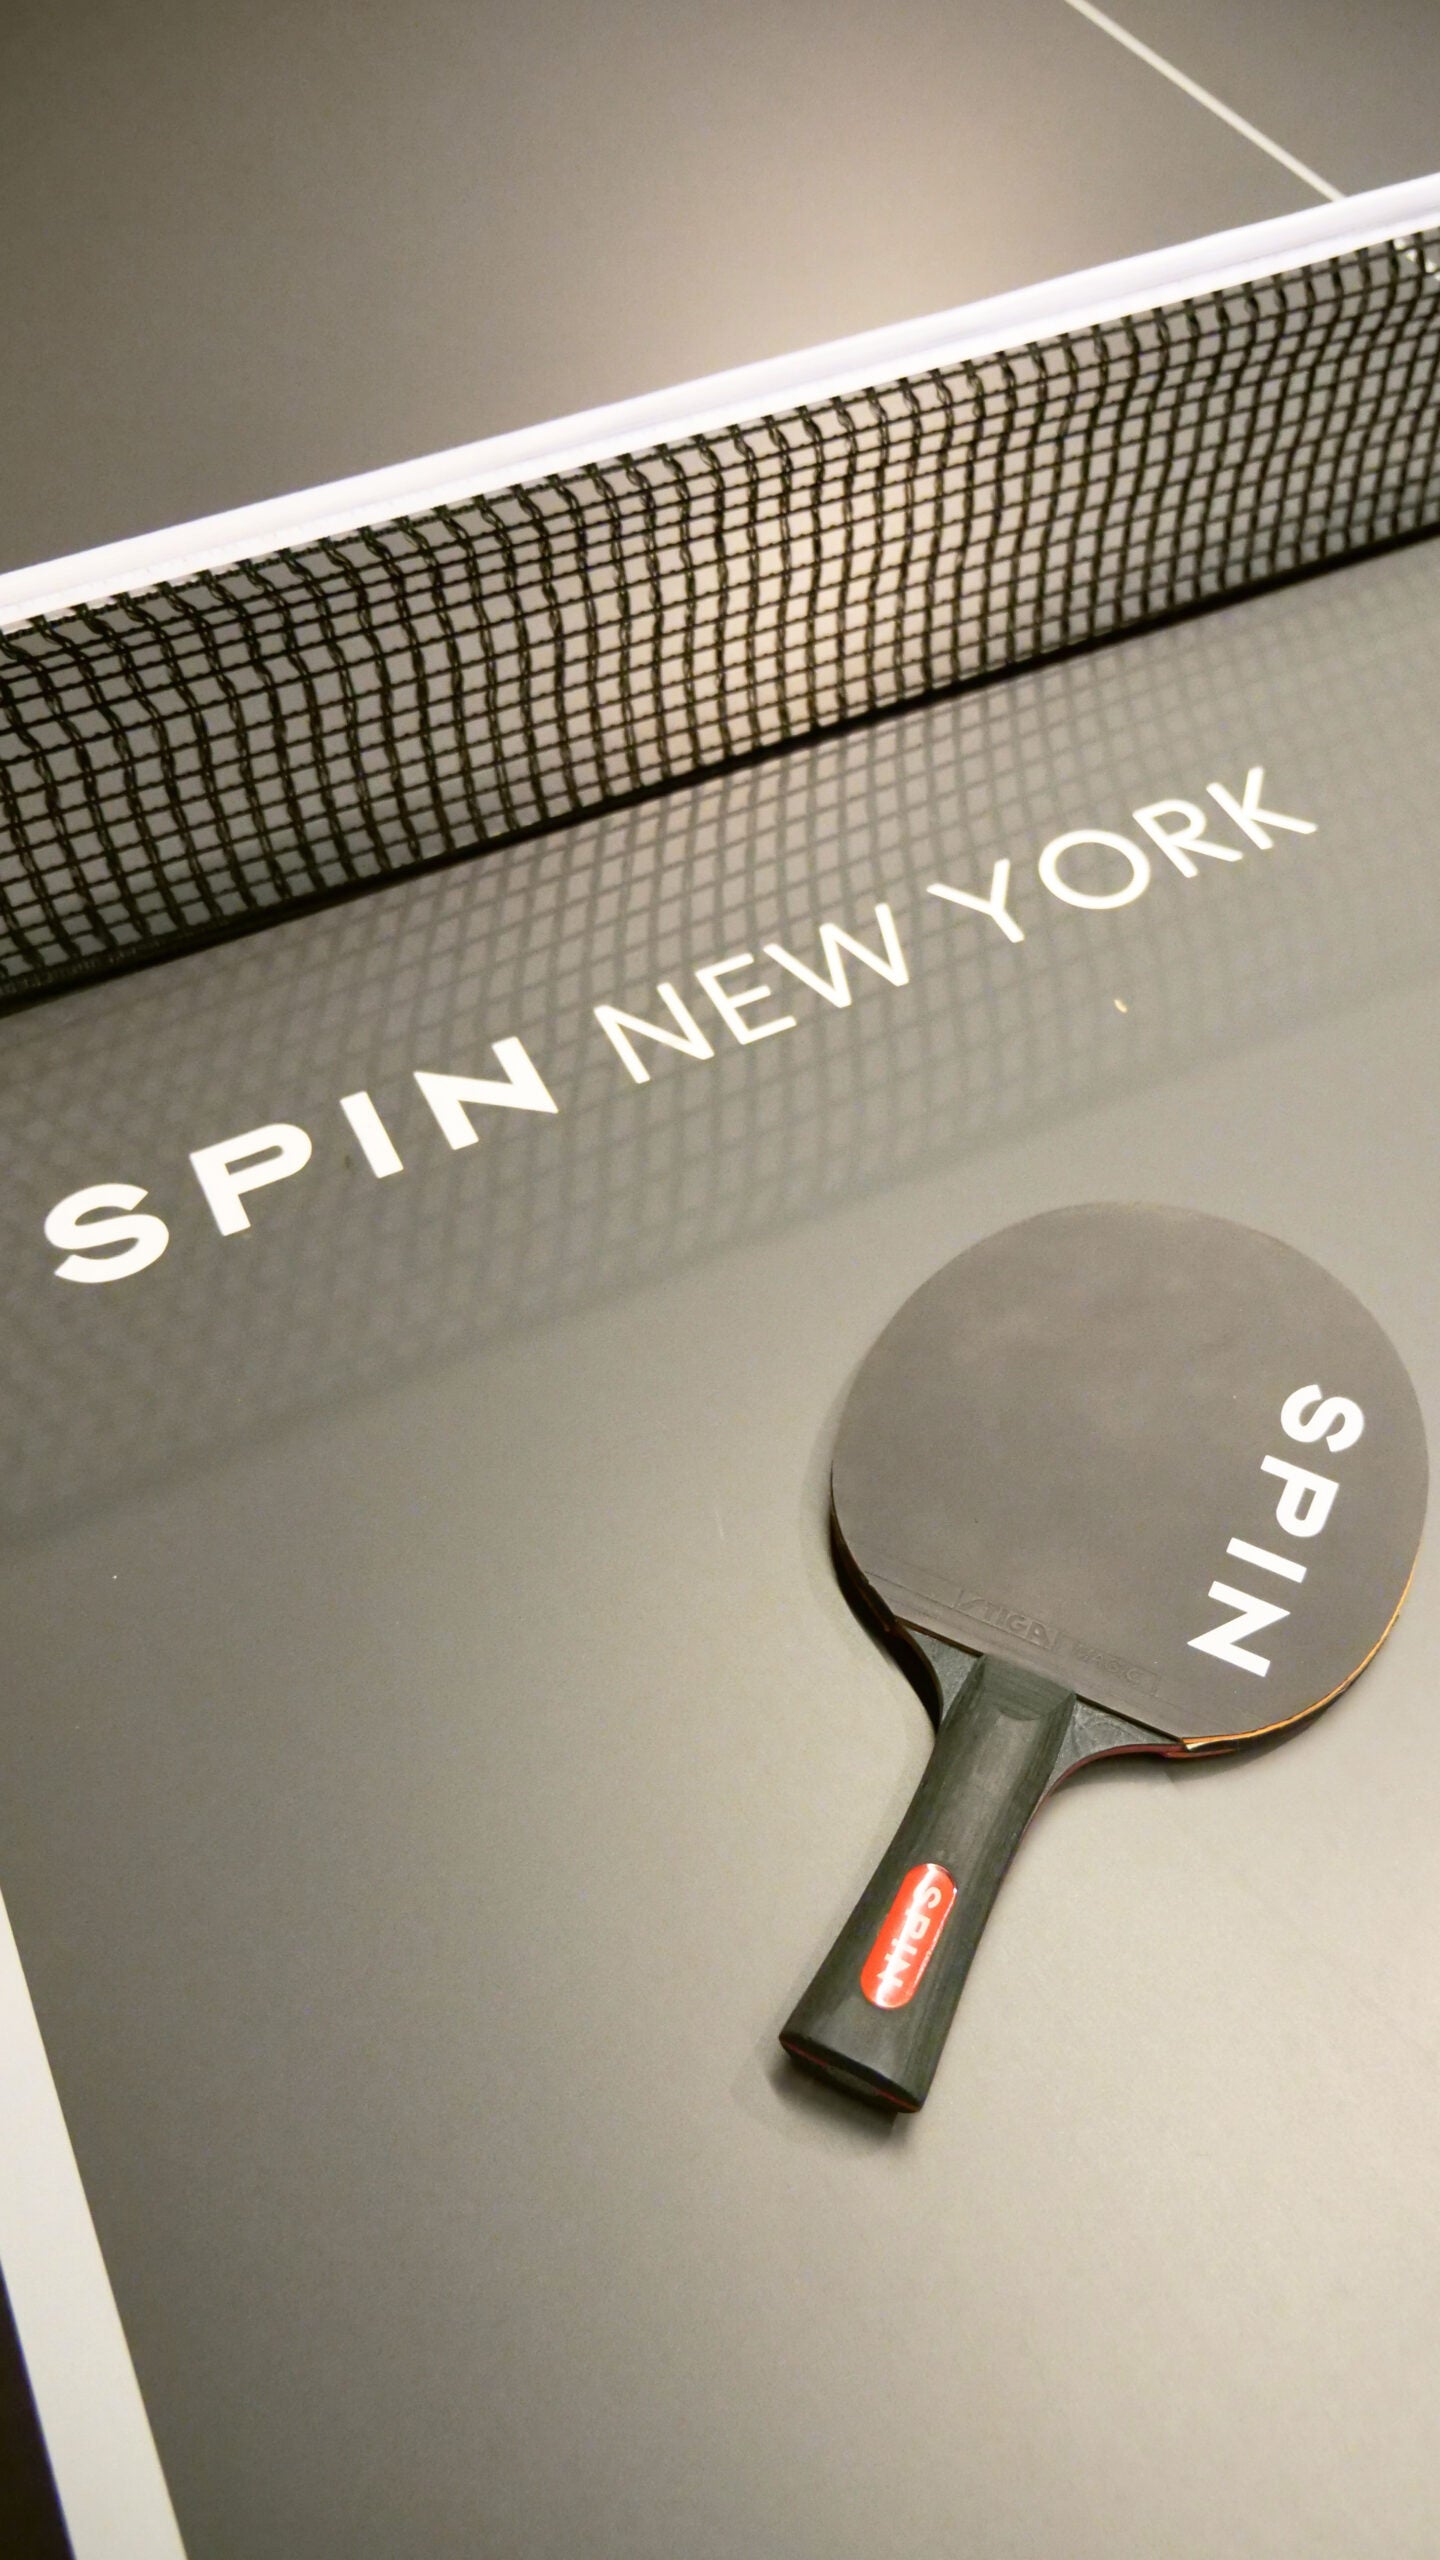 SPIN New York Flatiron